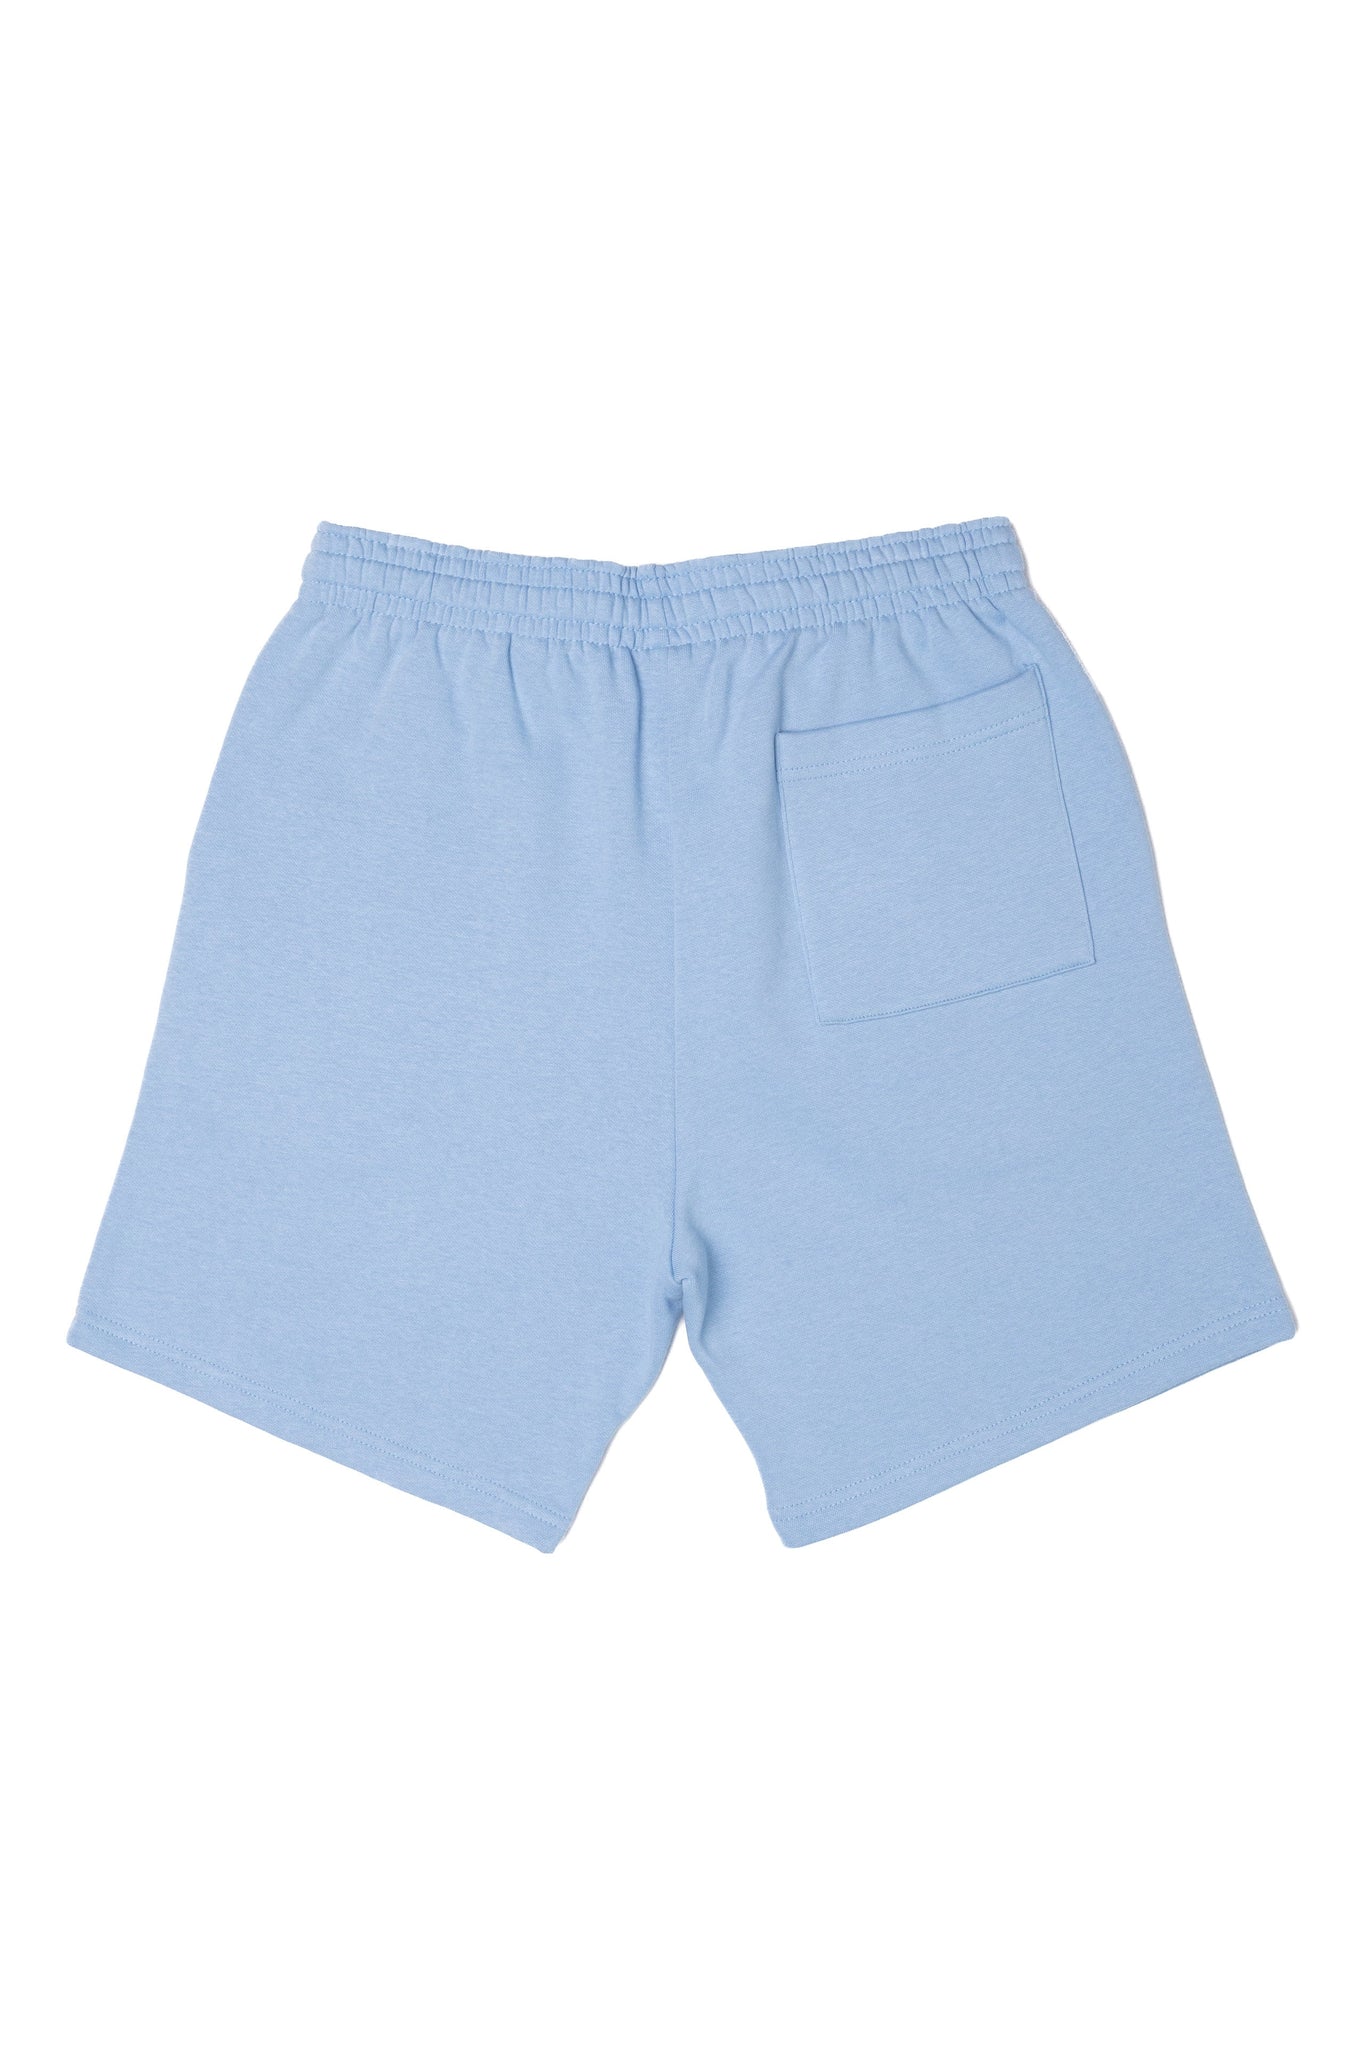 HERO - 6020 7’ Sweatshorts - Sky Blue Shorts